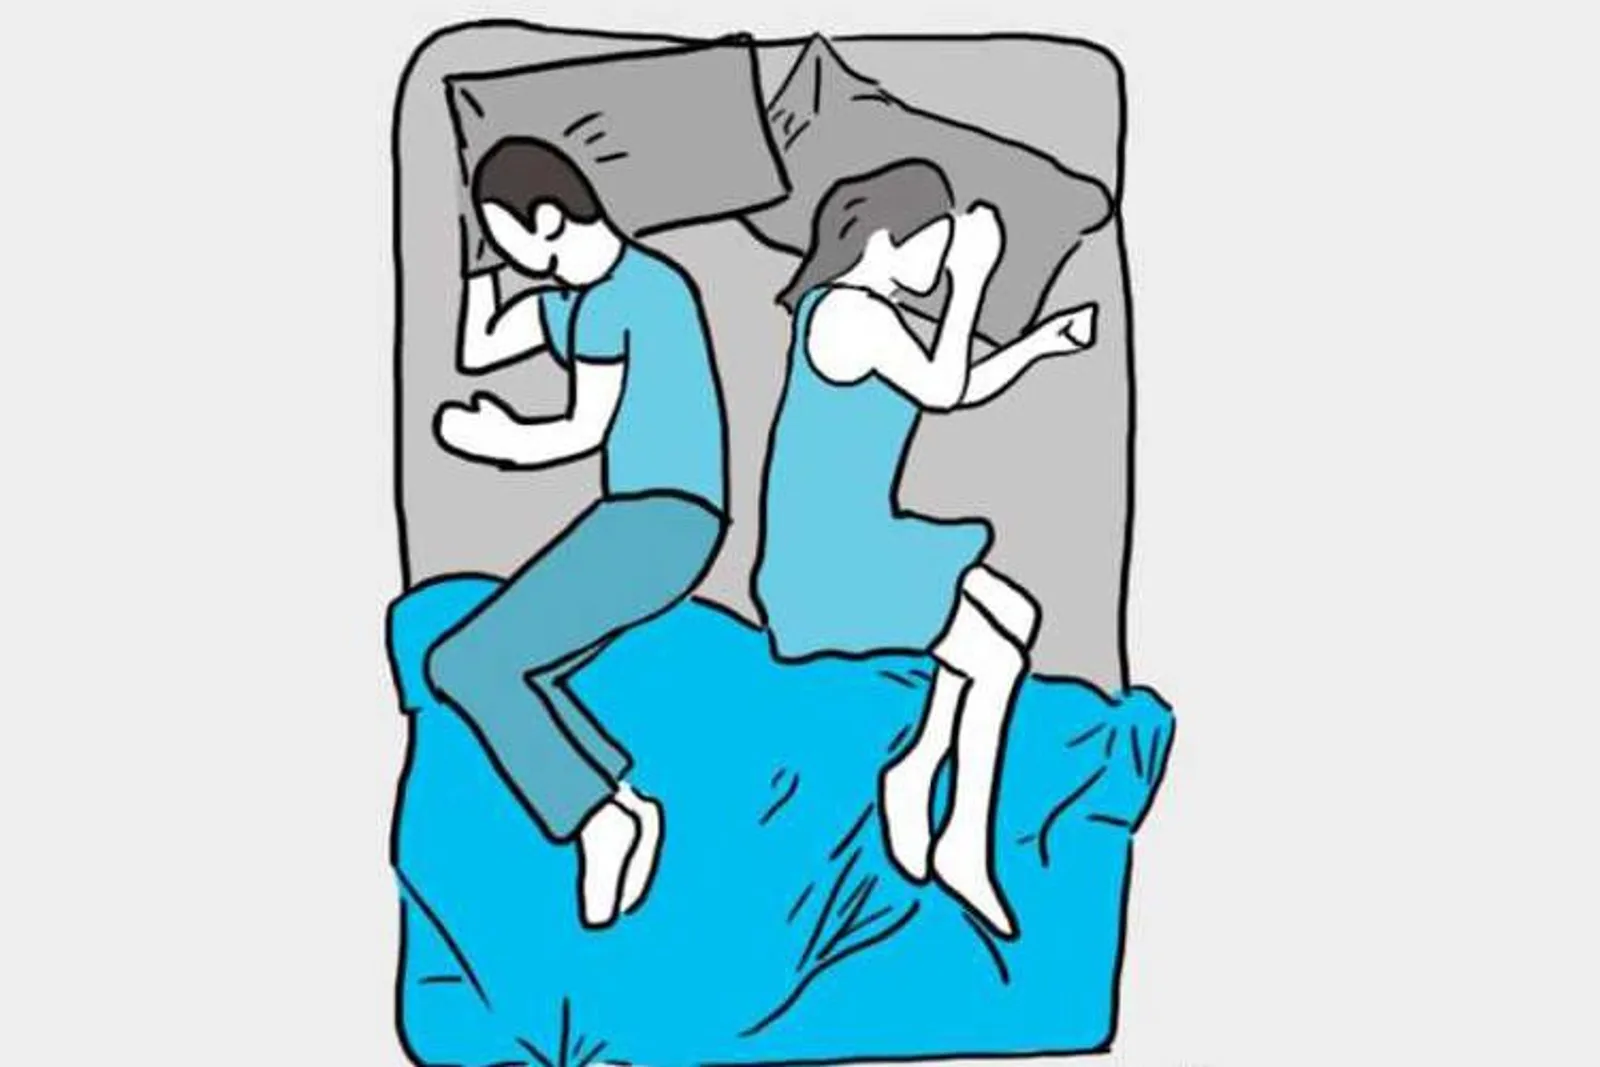 Bukan Mitos, Posisi Tidur dengan Pasangan Membuktikan Cinta Kalian